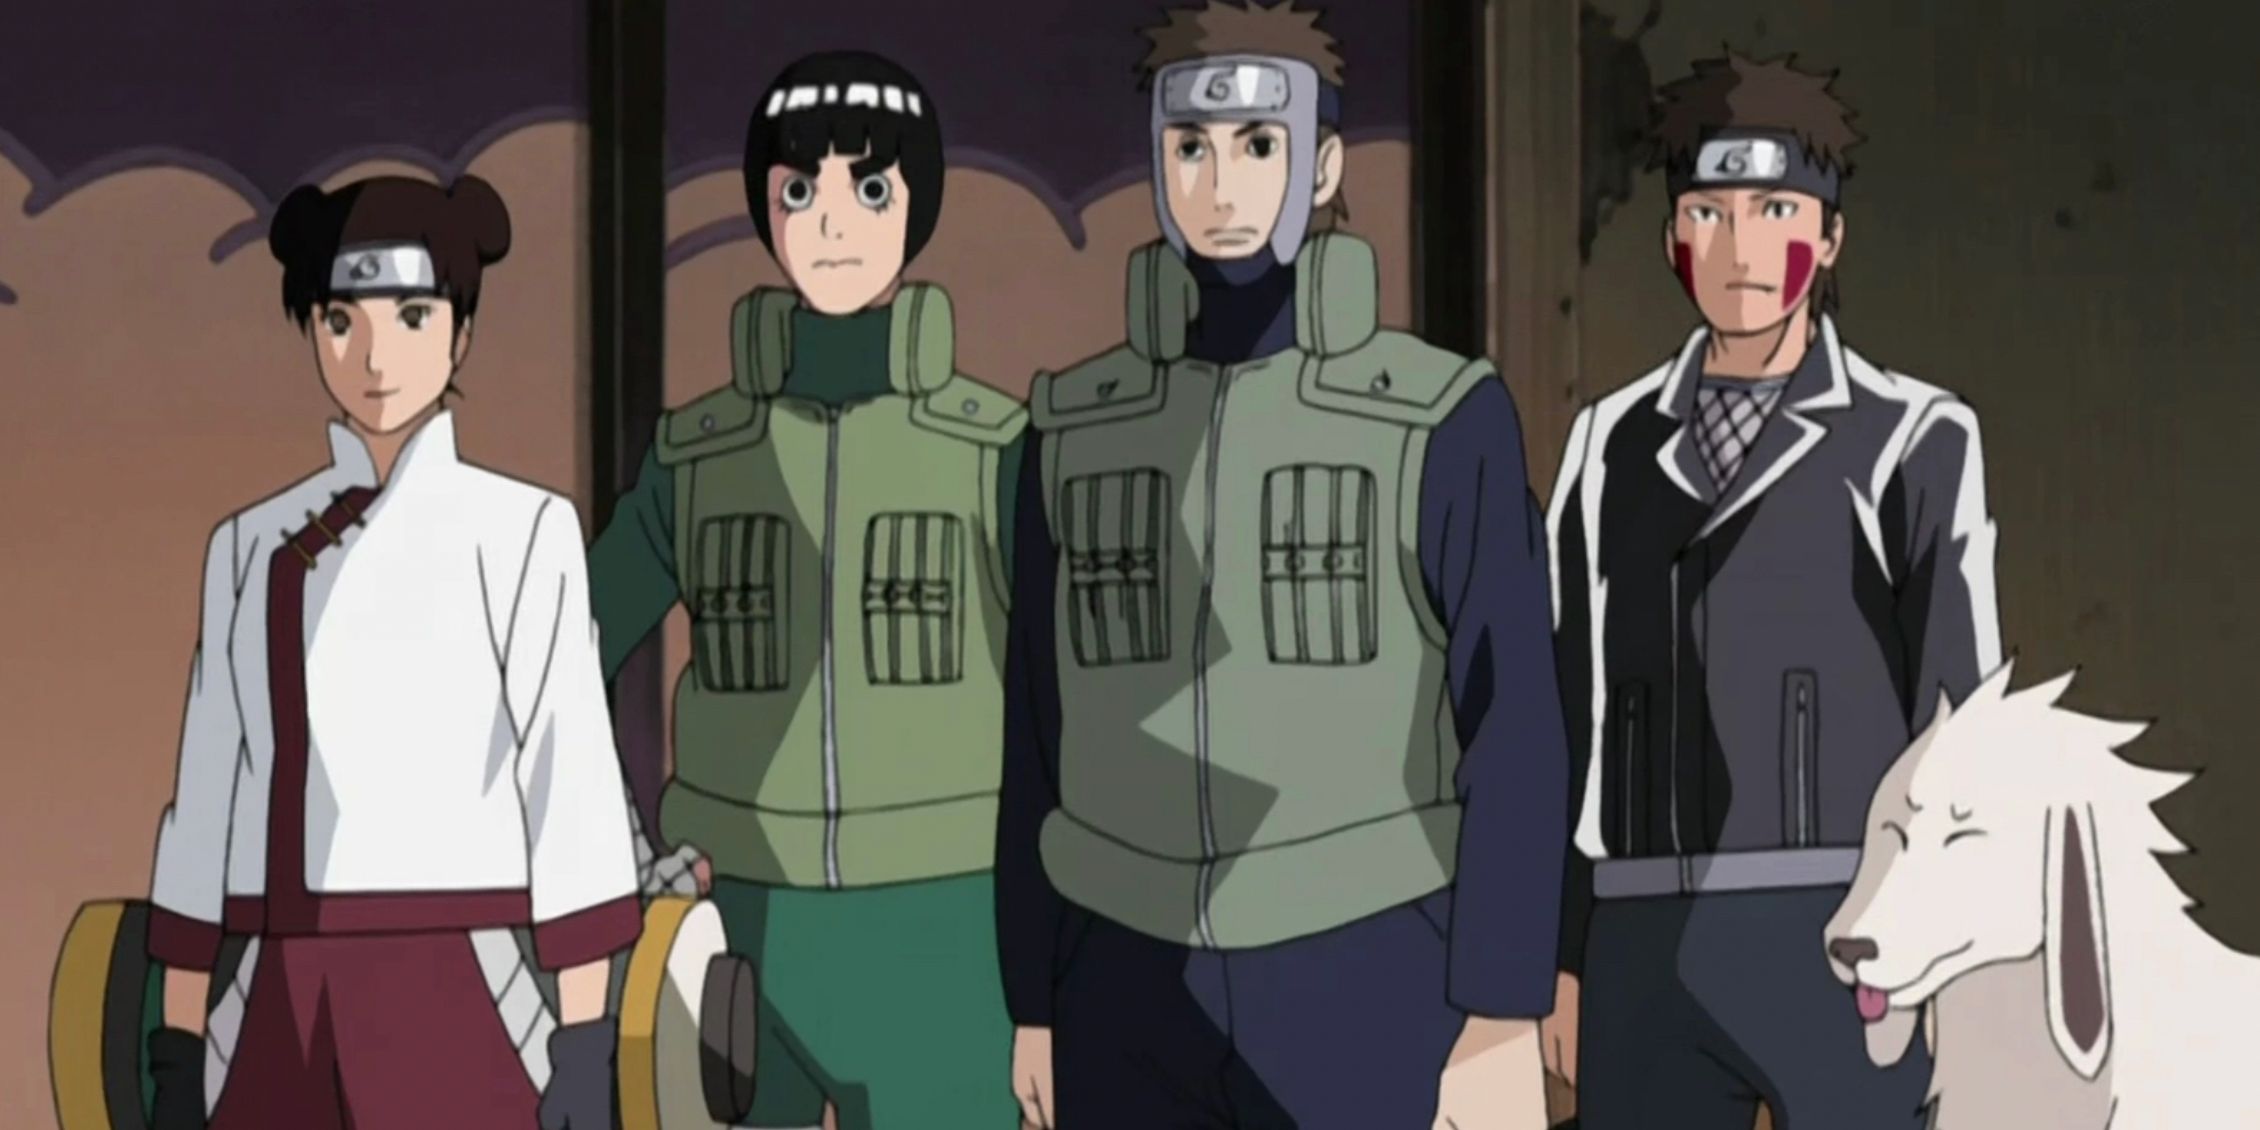 Tenten, Lee, Yamato, Kiba, and Akamaru stand together in Naruto Shippuden to form the Orochimaru Search Team 3